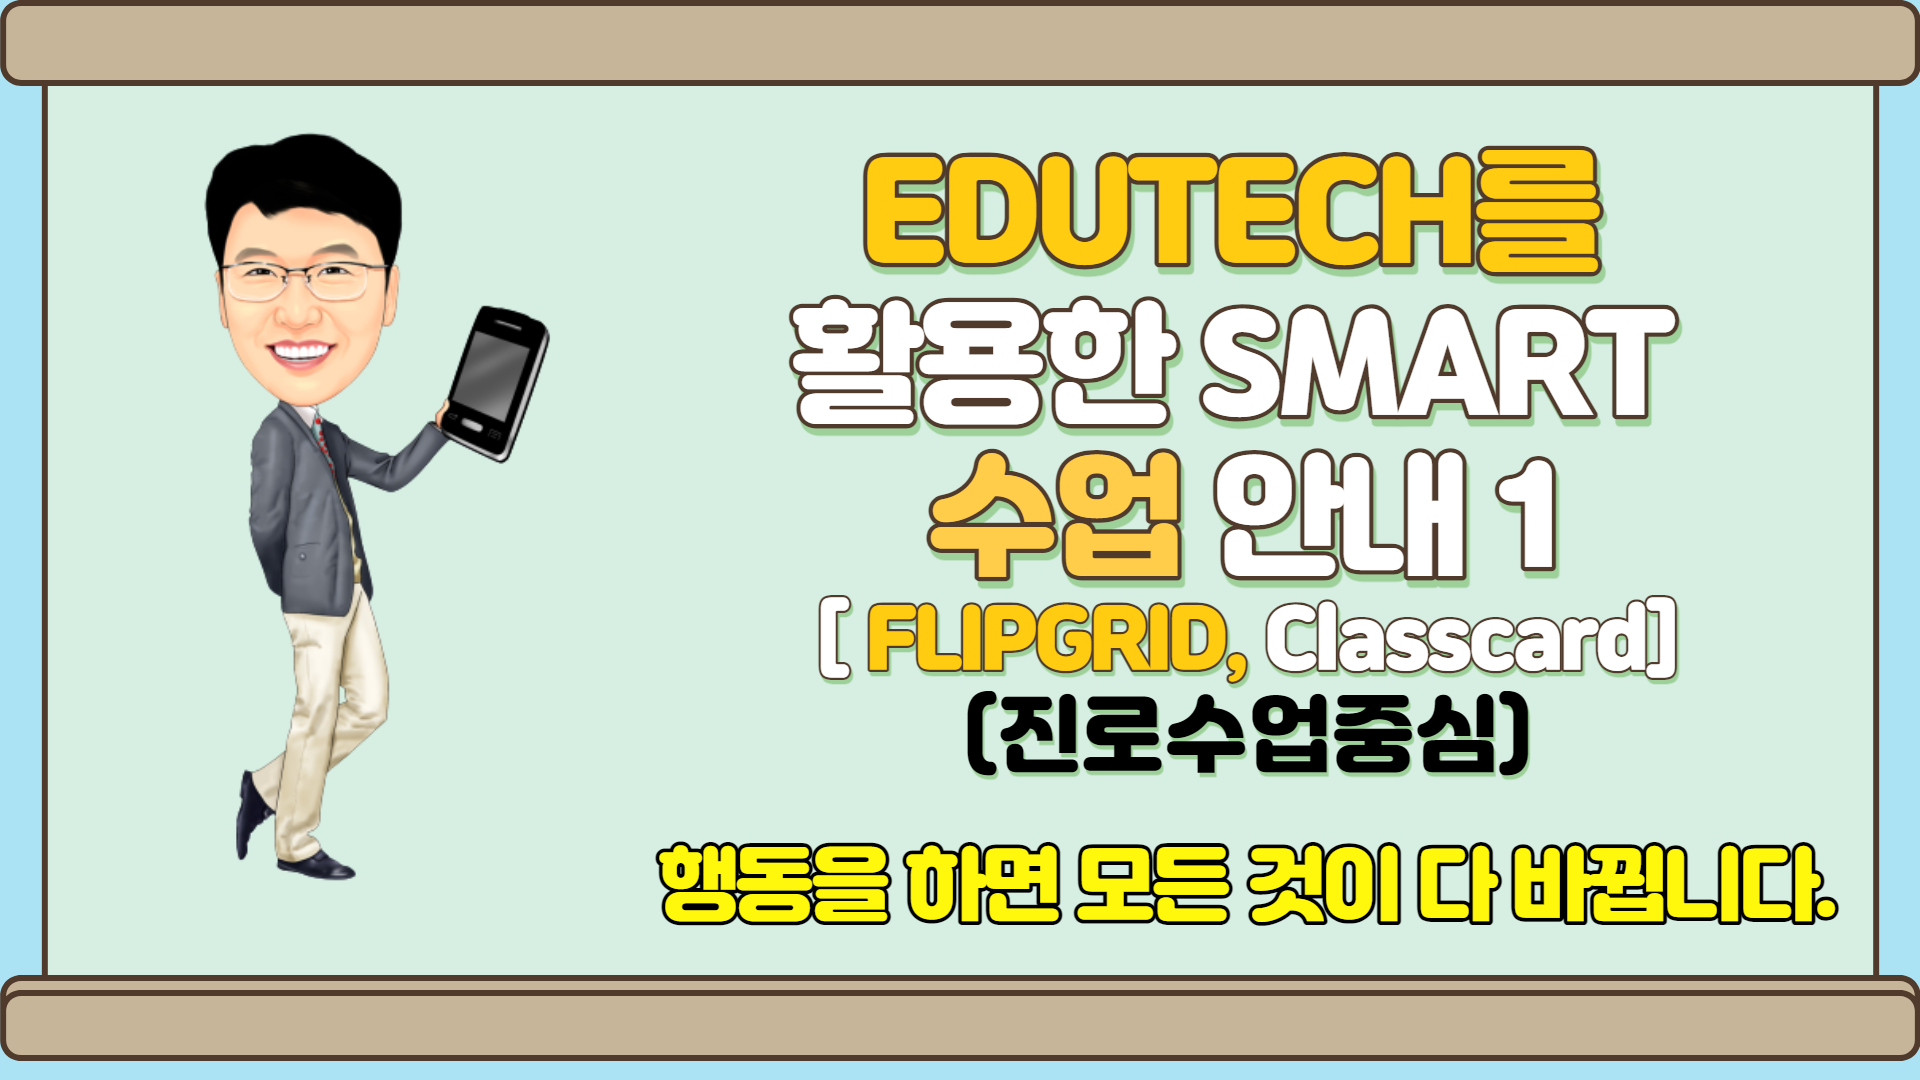 EDUTECH를 활용한 smart수업 방법 안내1 (Flipgrid,Classcard) 13:00~14:50